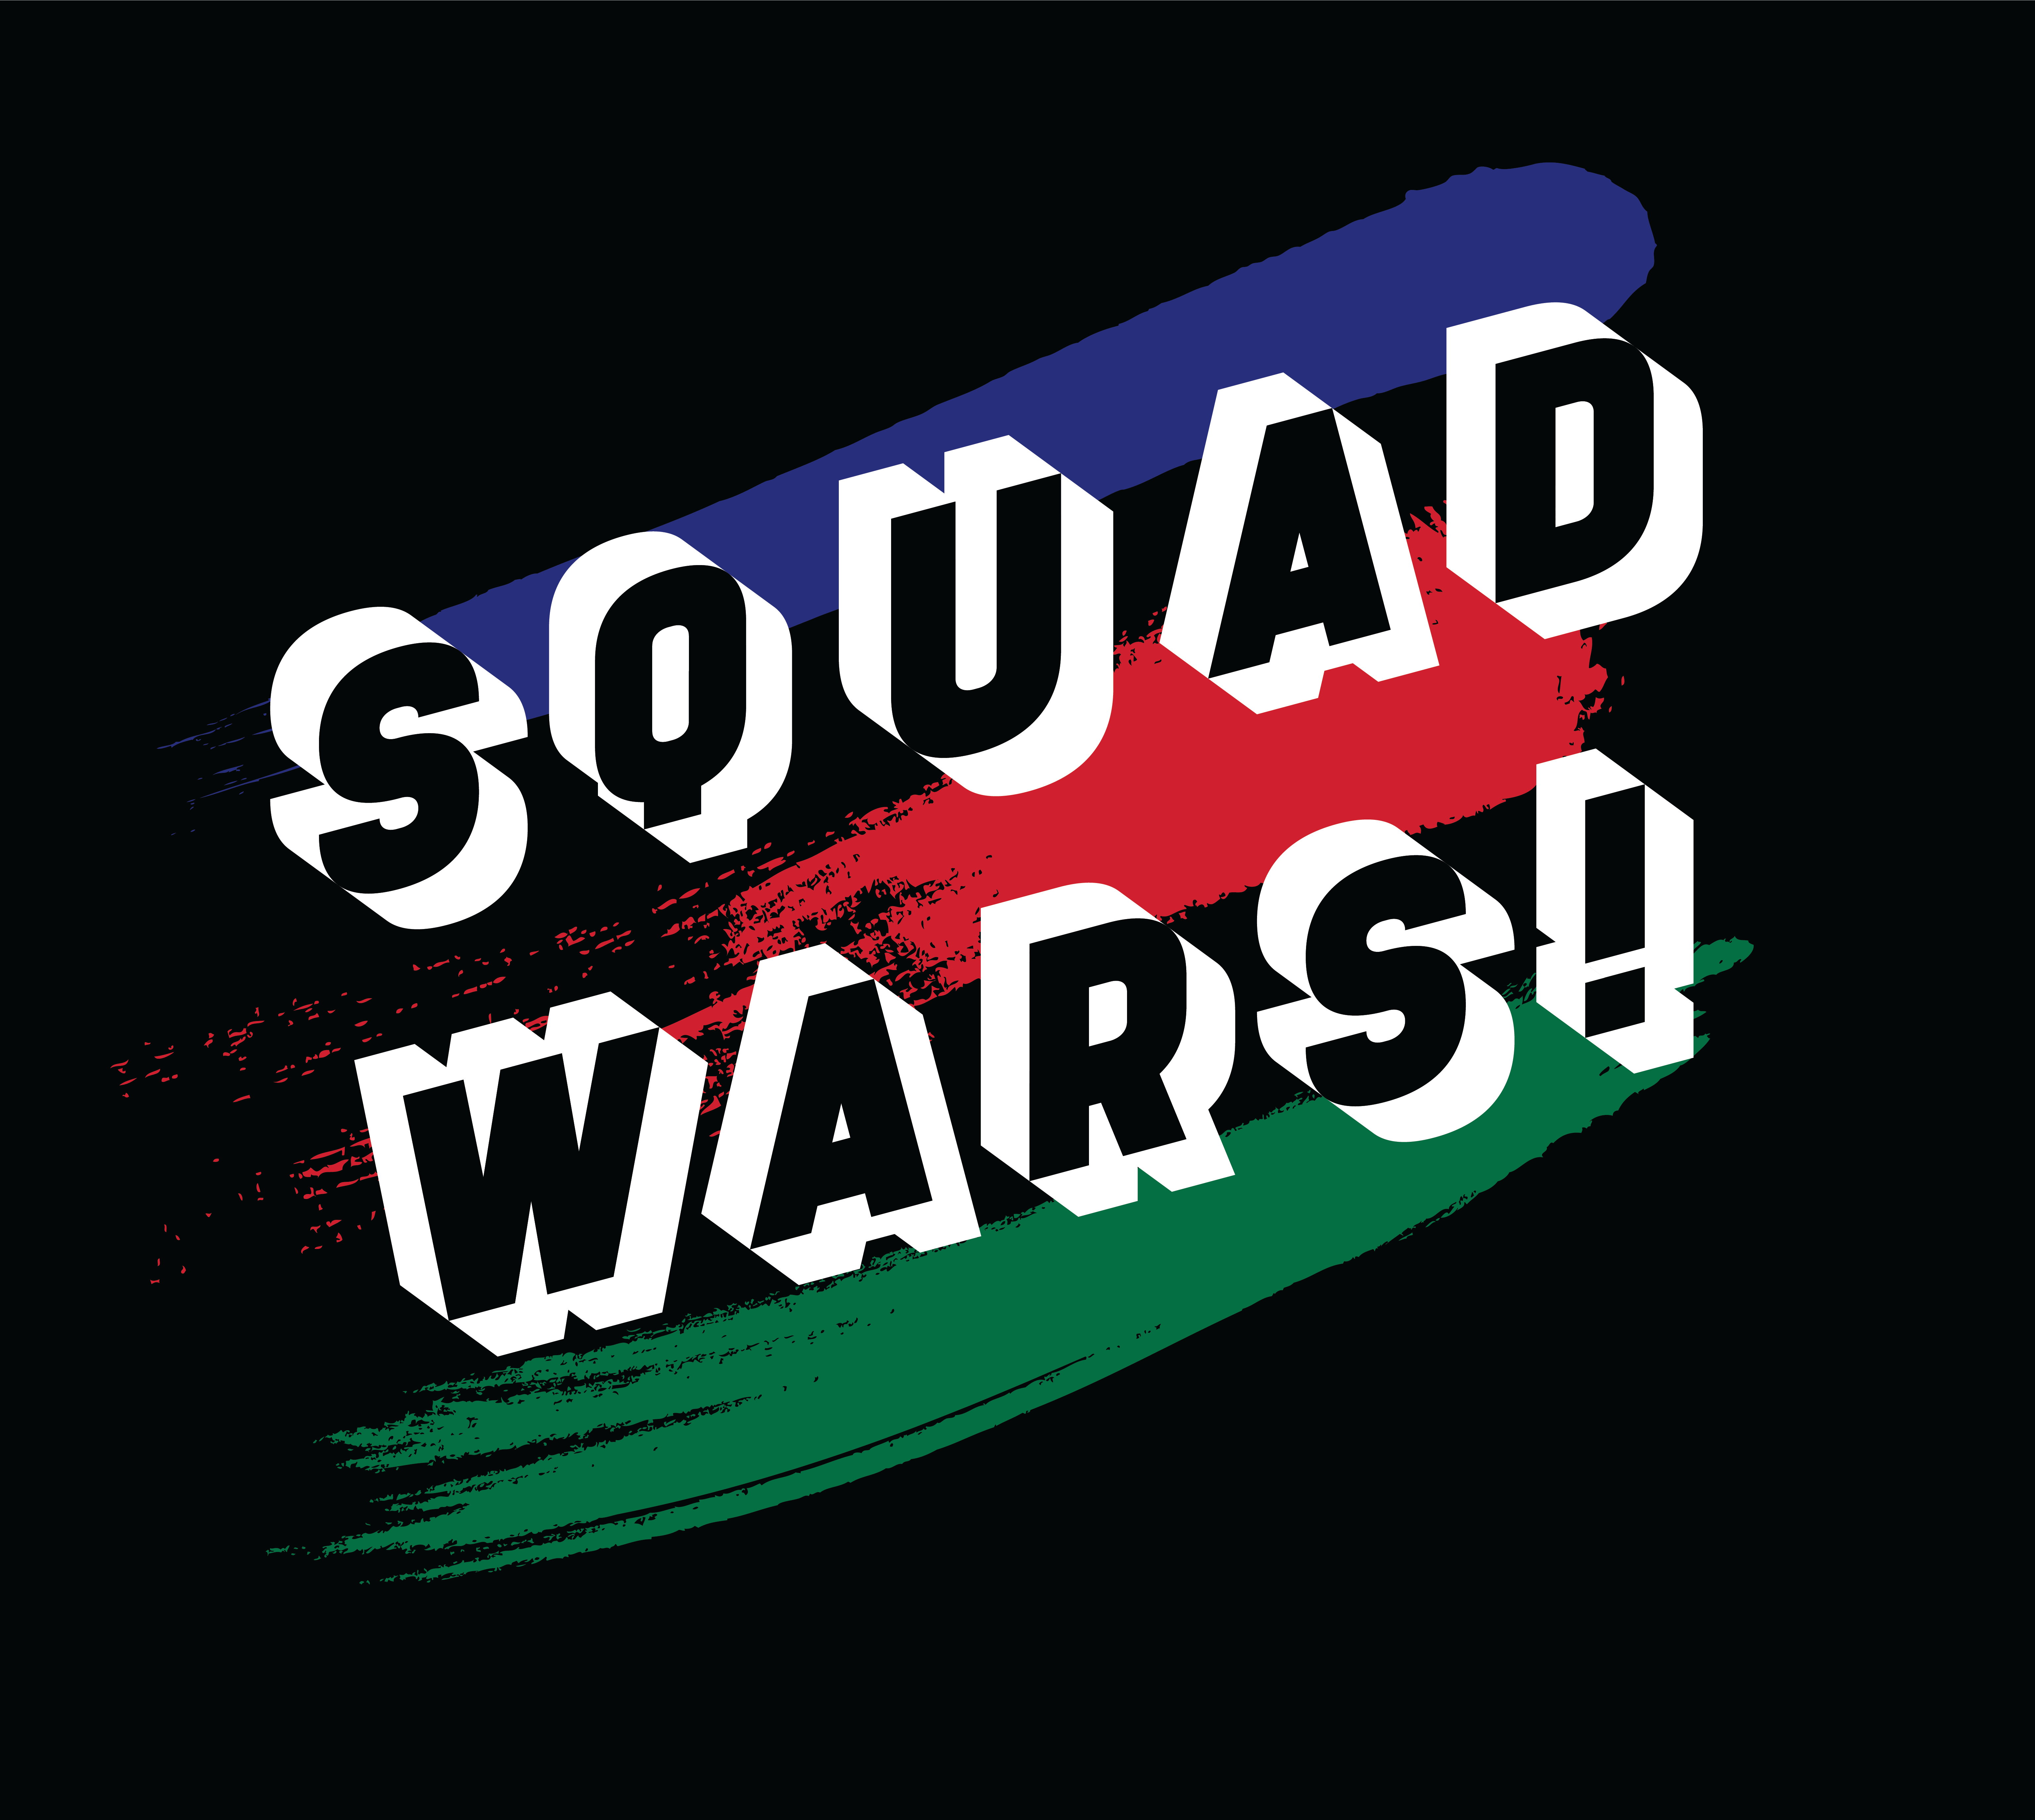 Squad Wars